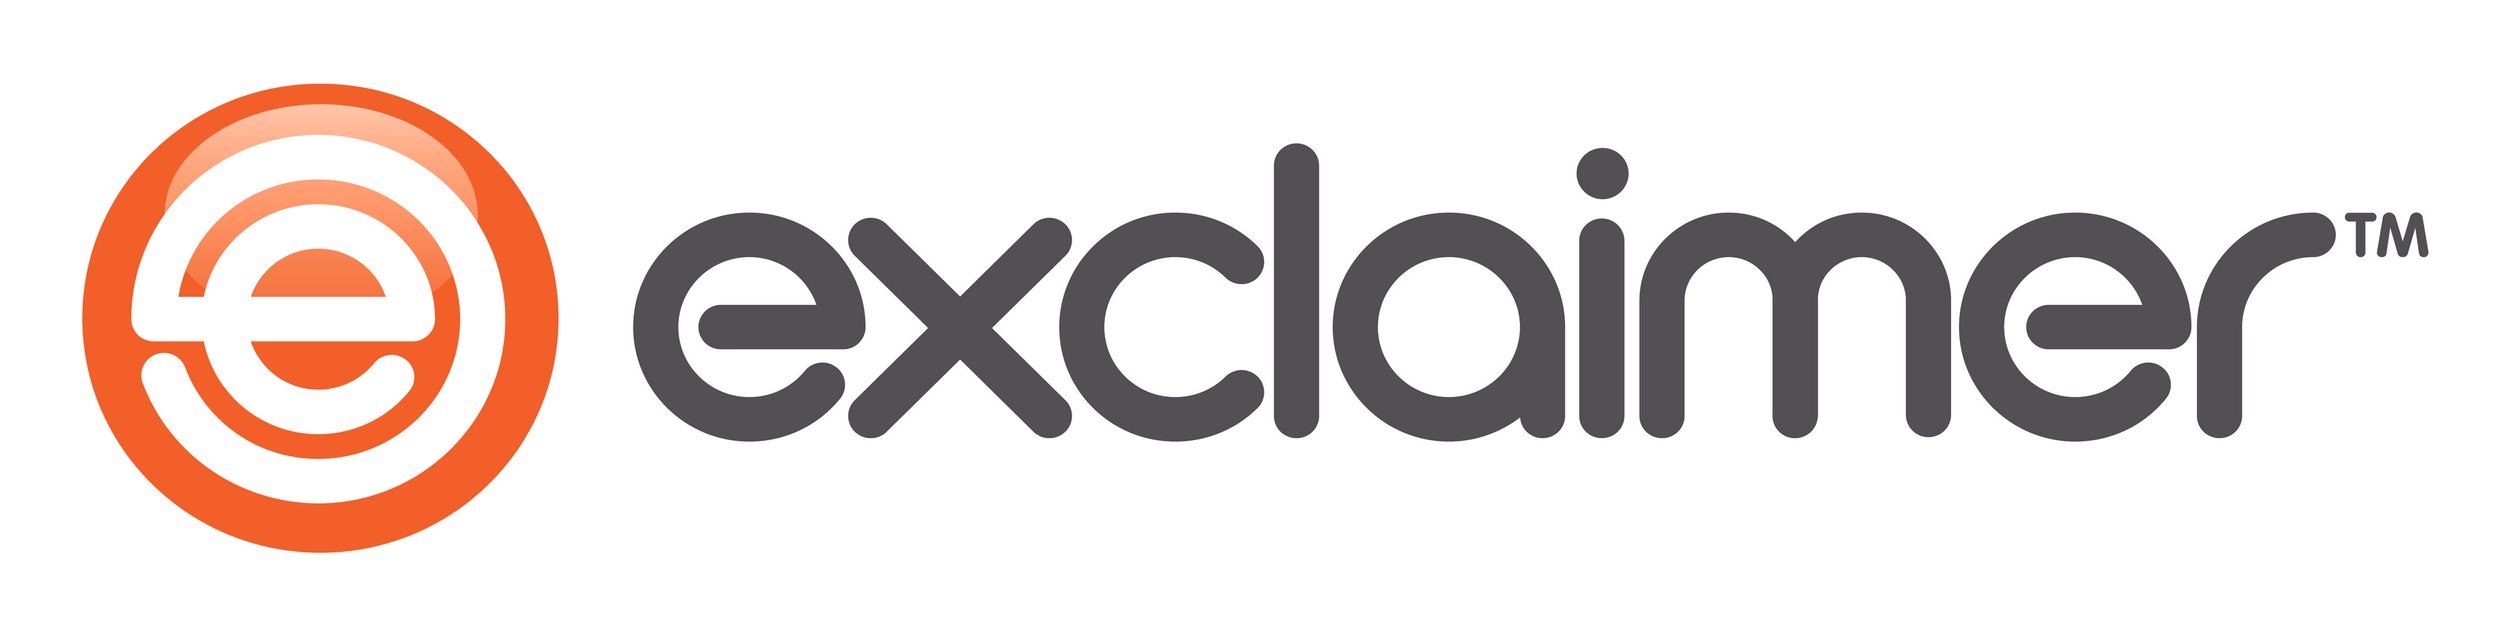 exclaimer-logo.jpg